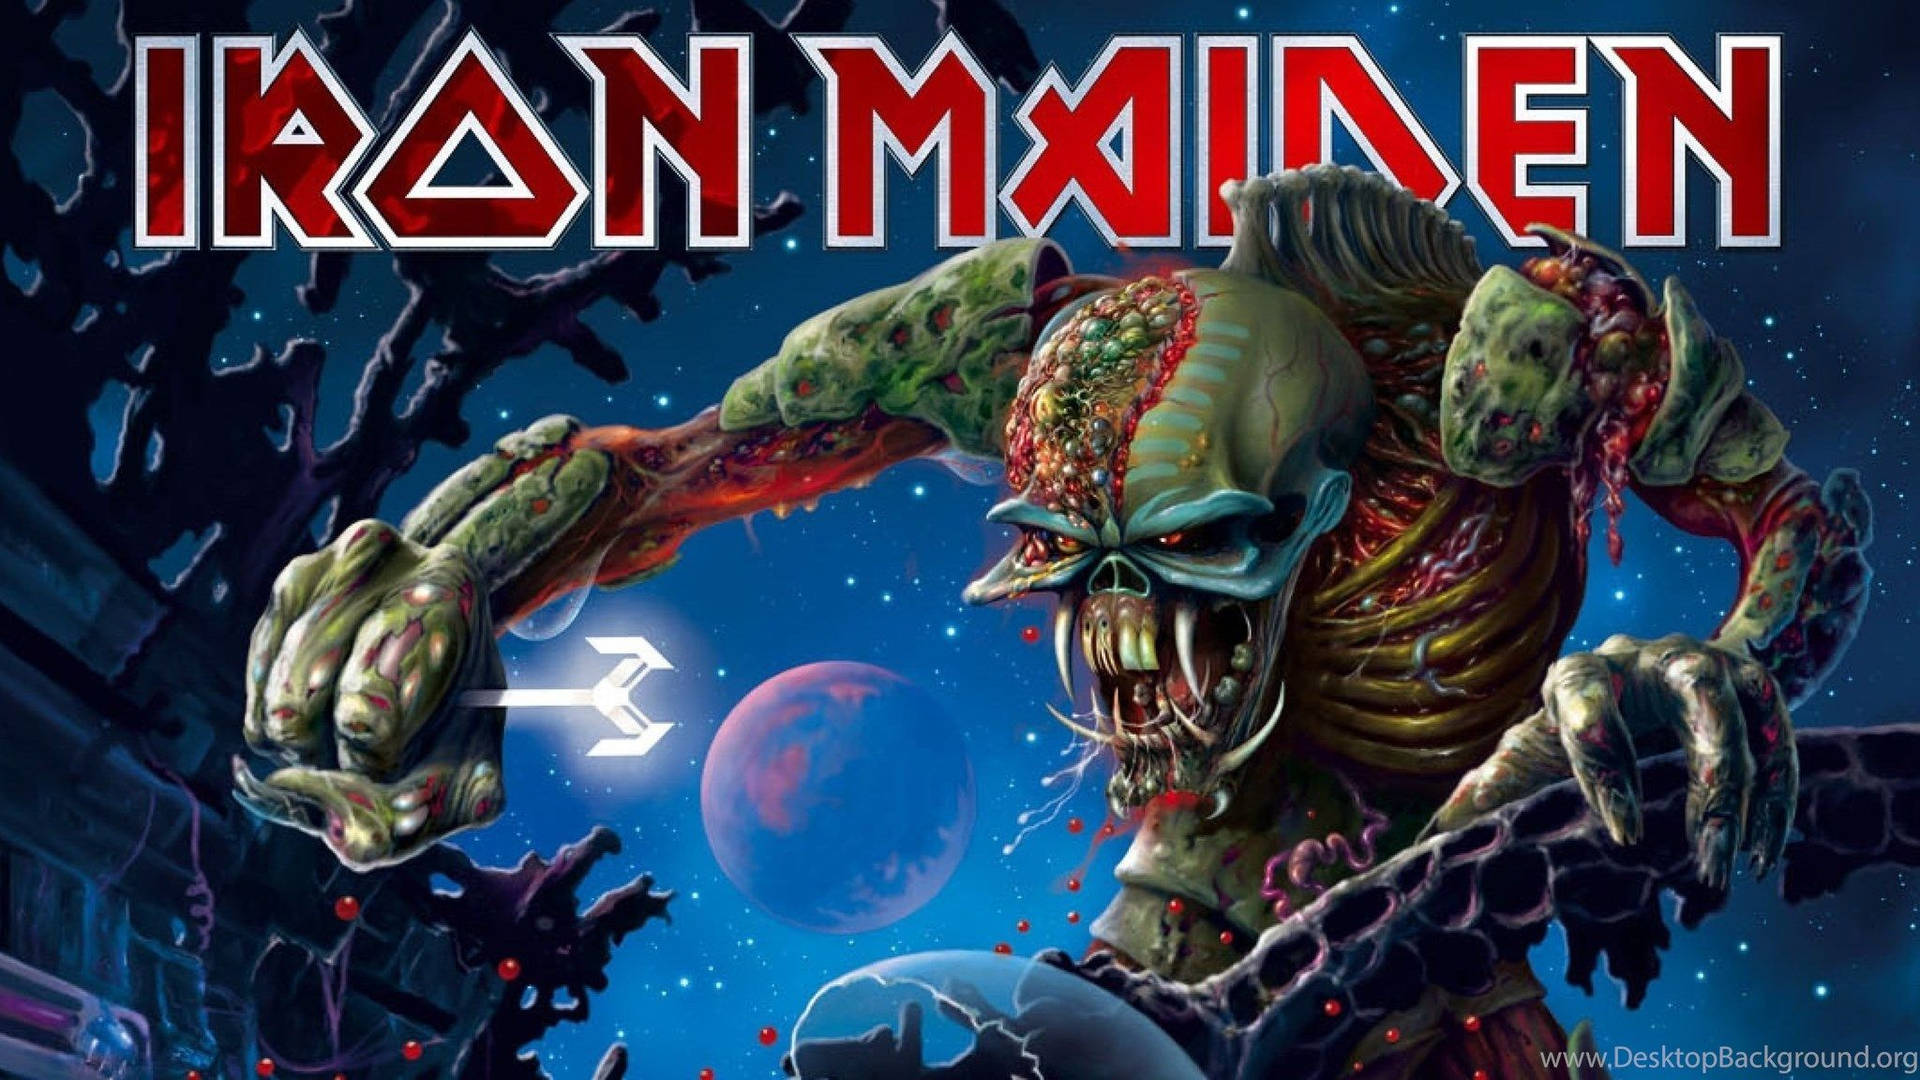 Iron Maiden: The Final Frontier Wallpaper